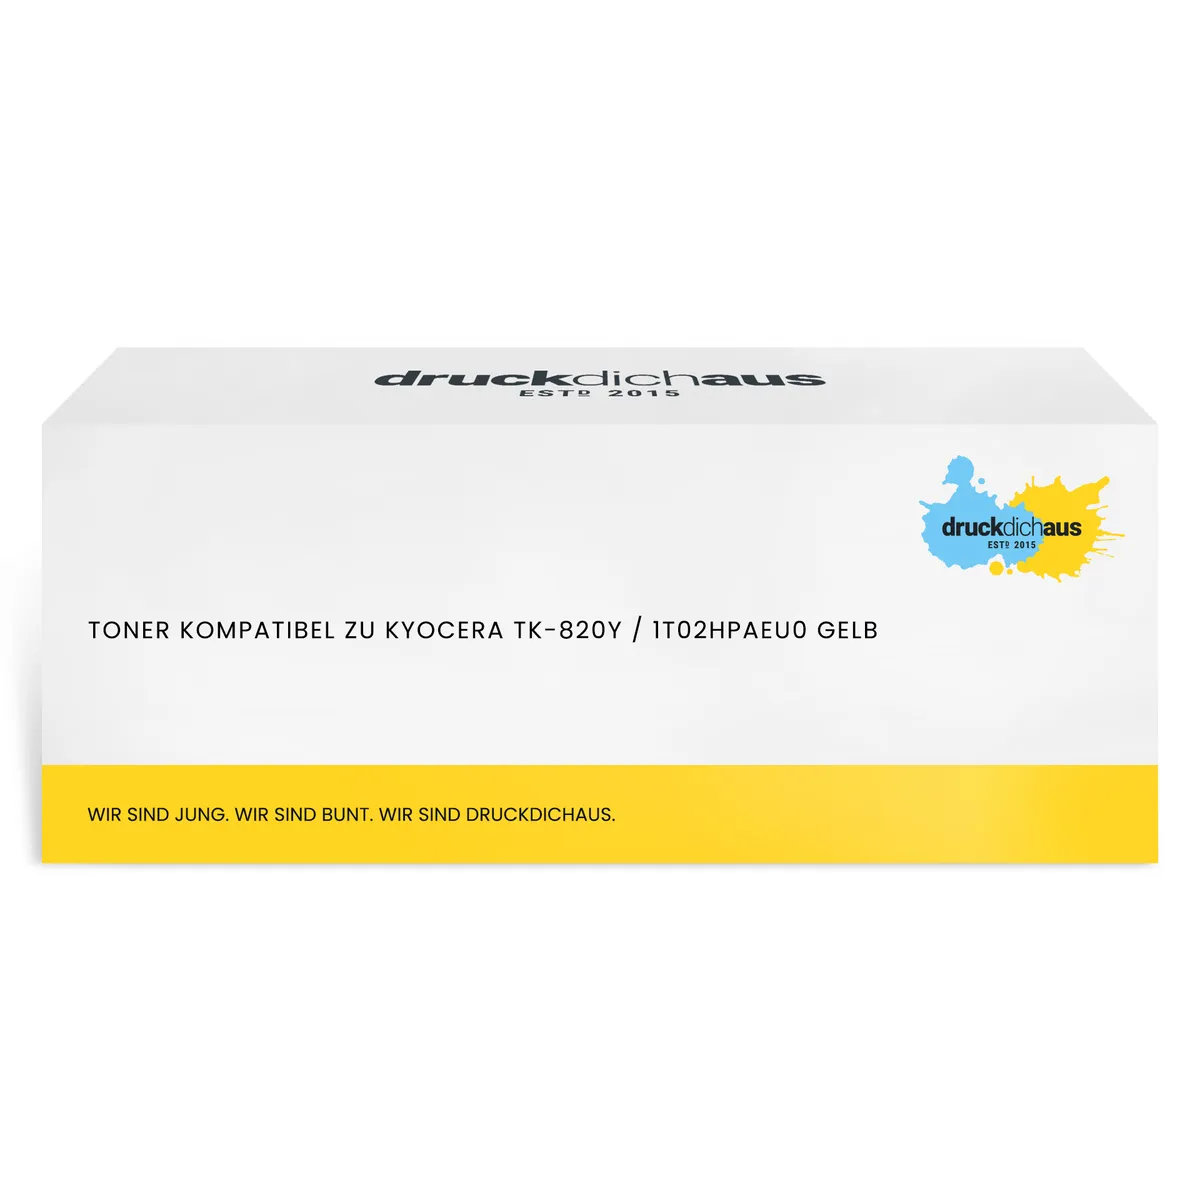 Toner kompatibel zu Kyocera TK-820Y / 1T02HPAEU0 gelb